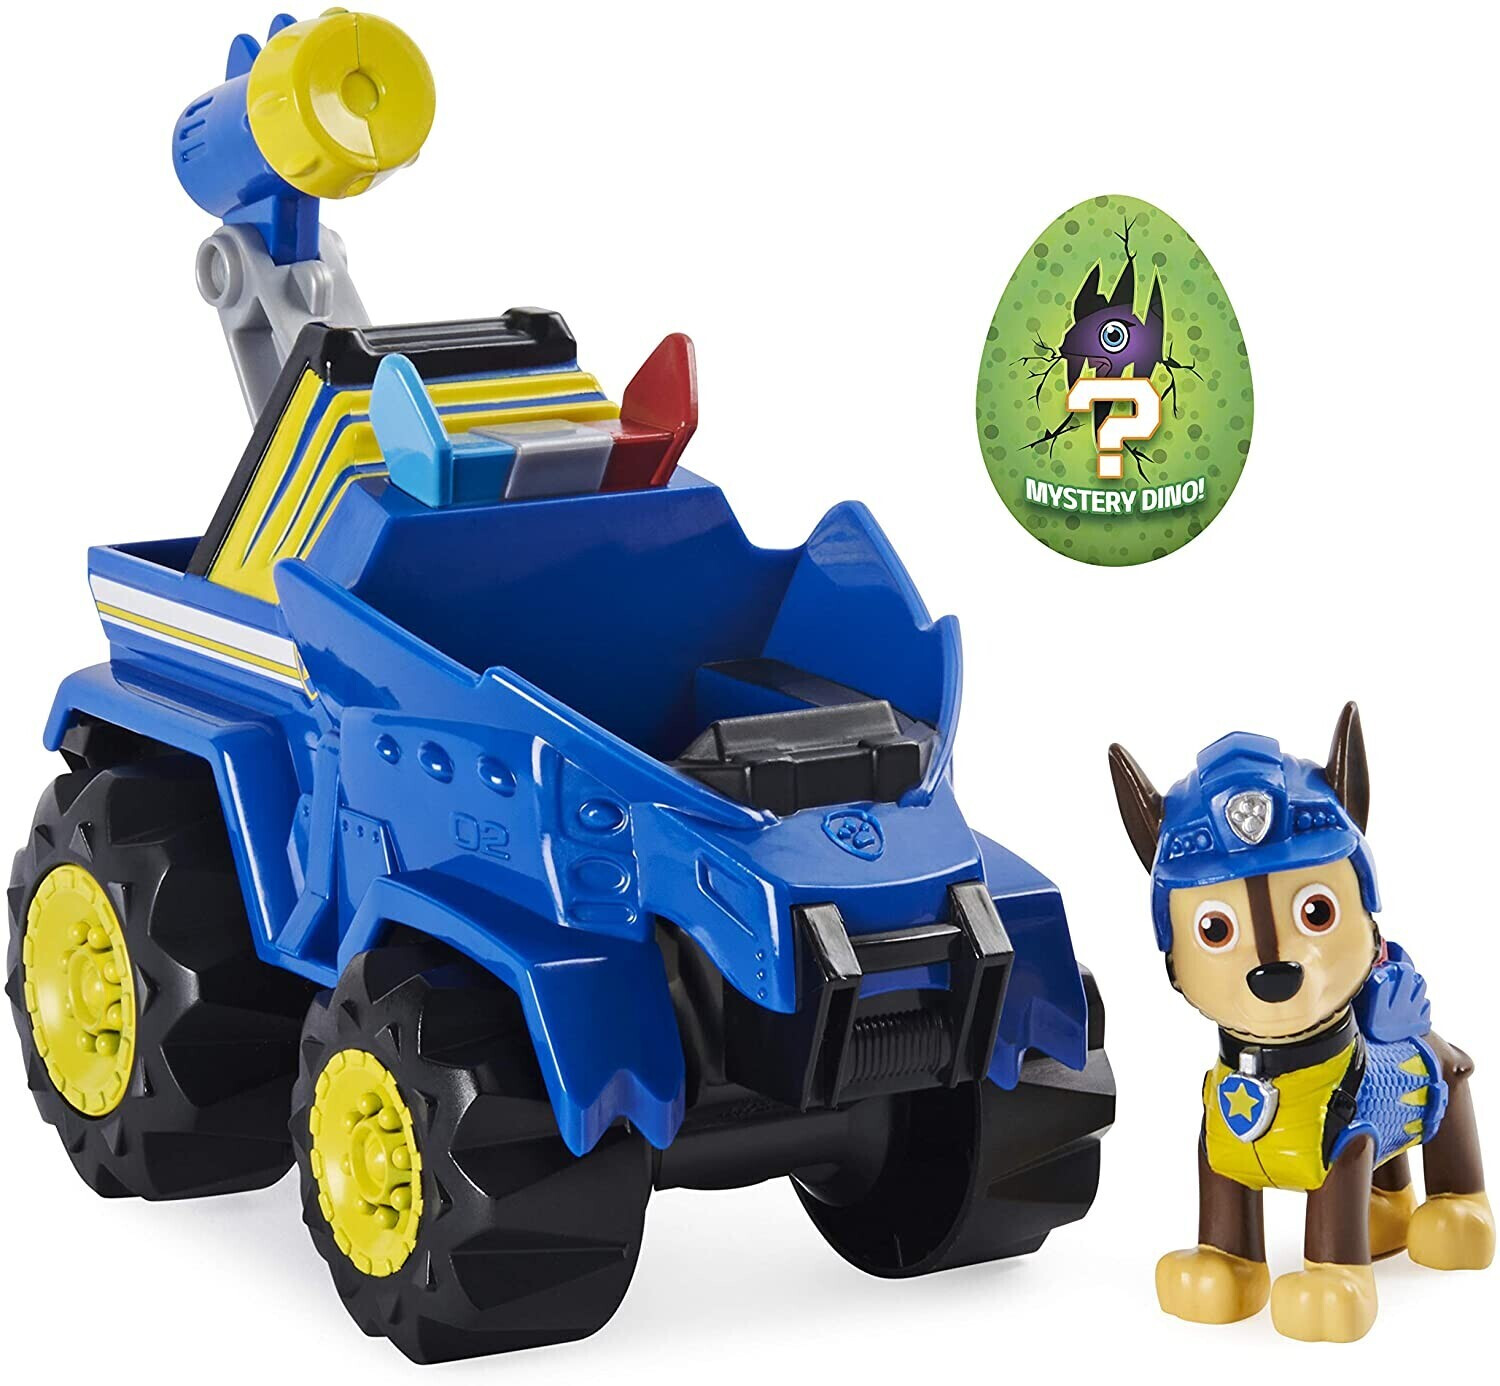 Spin Master La Pat' Patrouille 6056930 Children's Toy Vehicle +